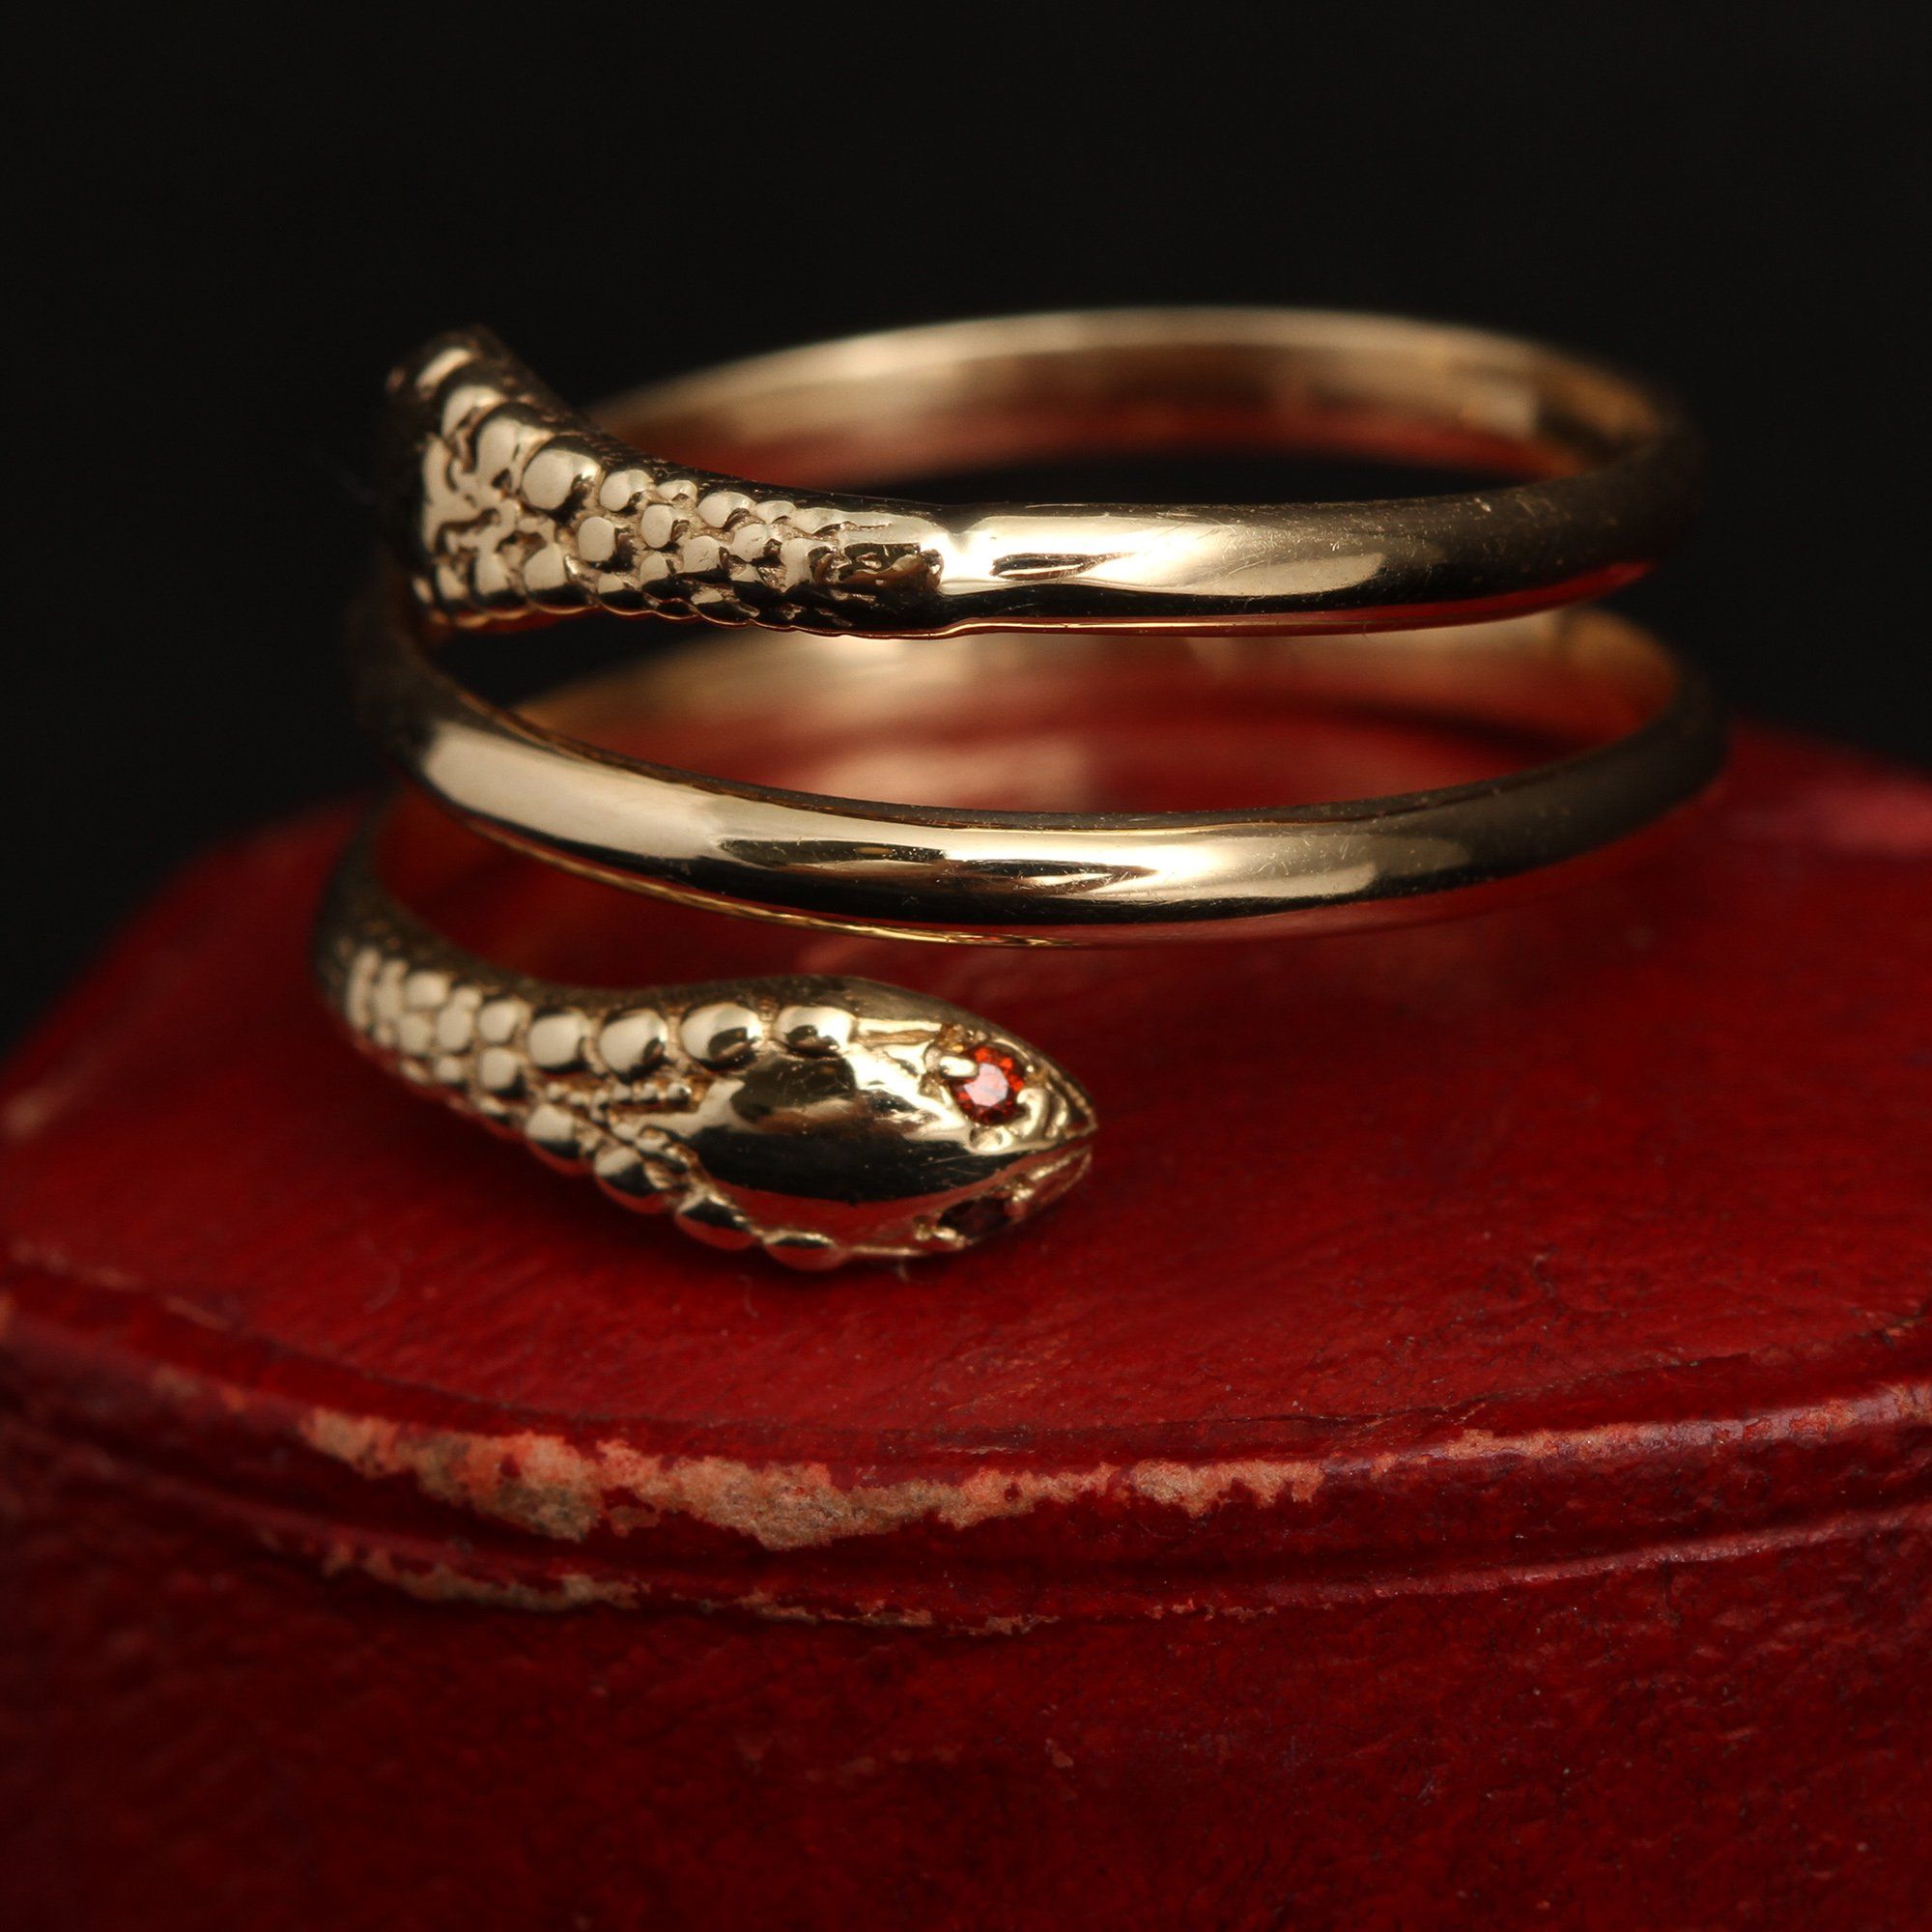 Detail of Two-Headed Snake Ring